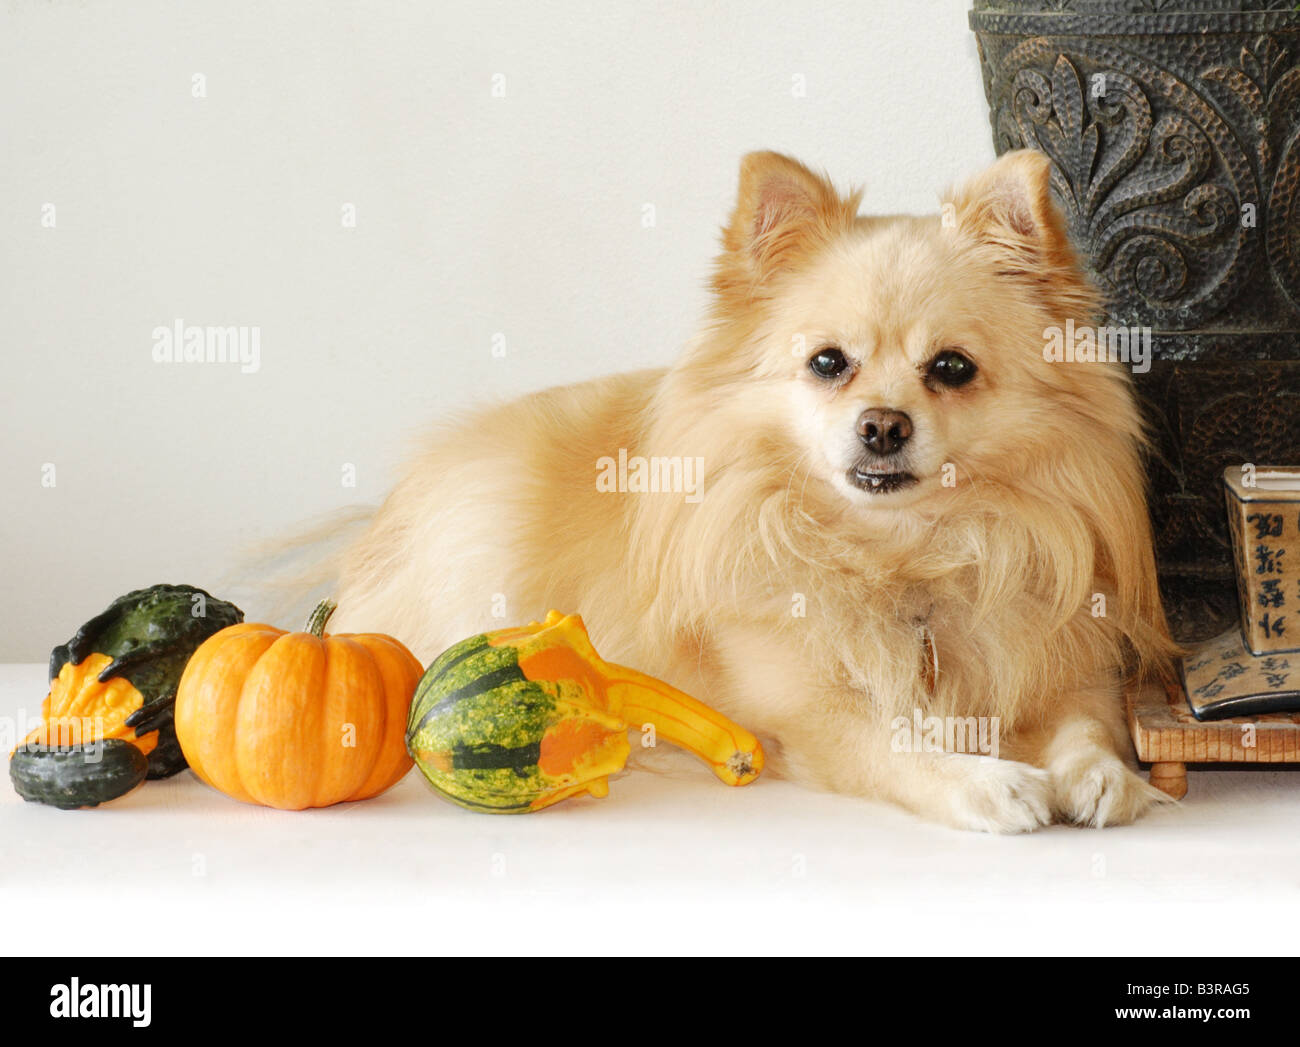 Pomeranian dog sitting among pumpkin and squash Stock Photo